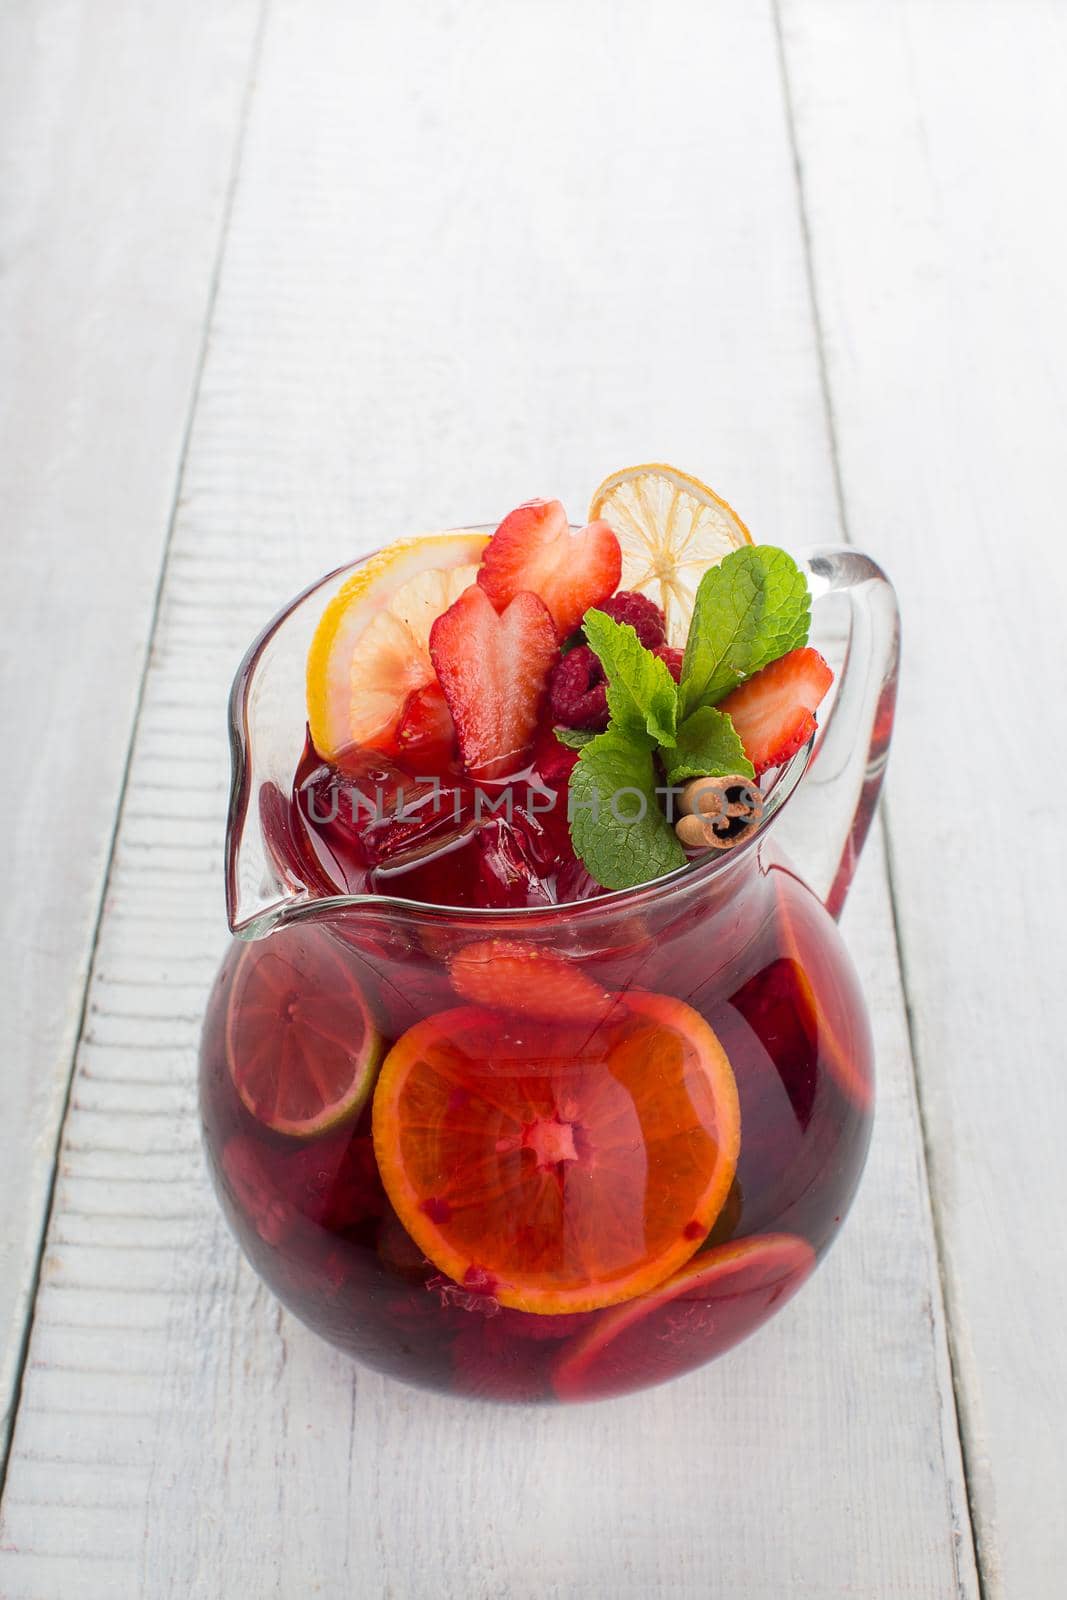 lemonade with strawberries, lemon and ice by Demkat